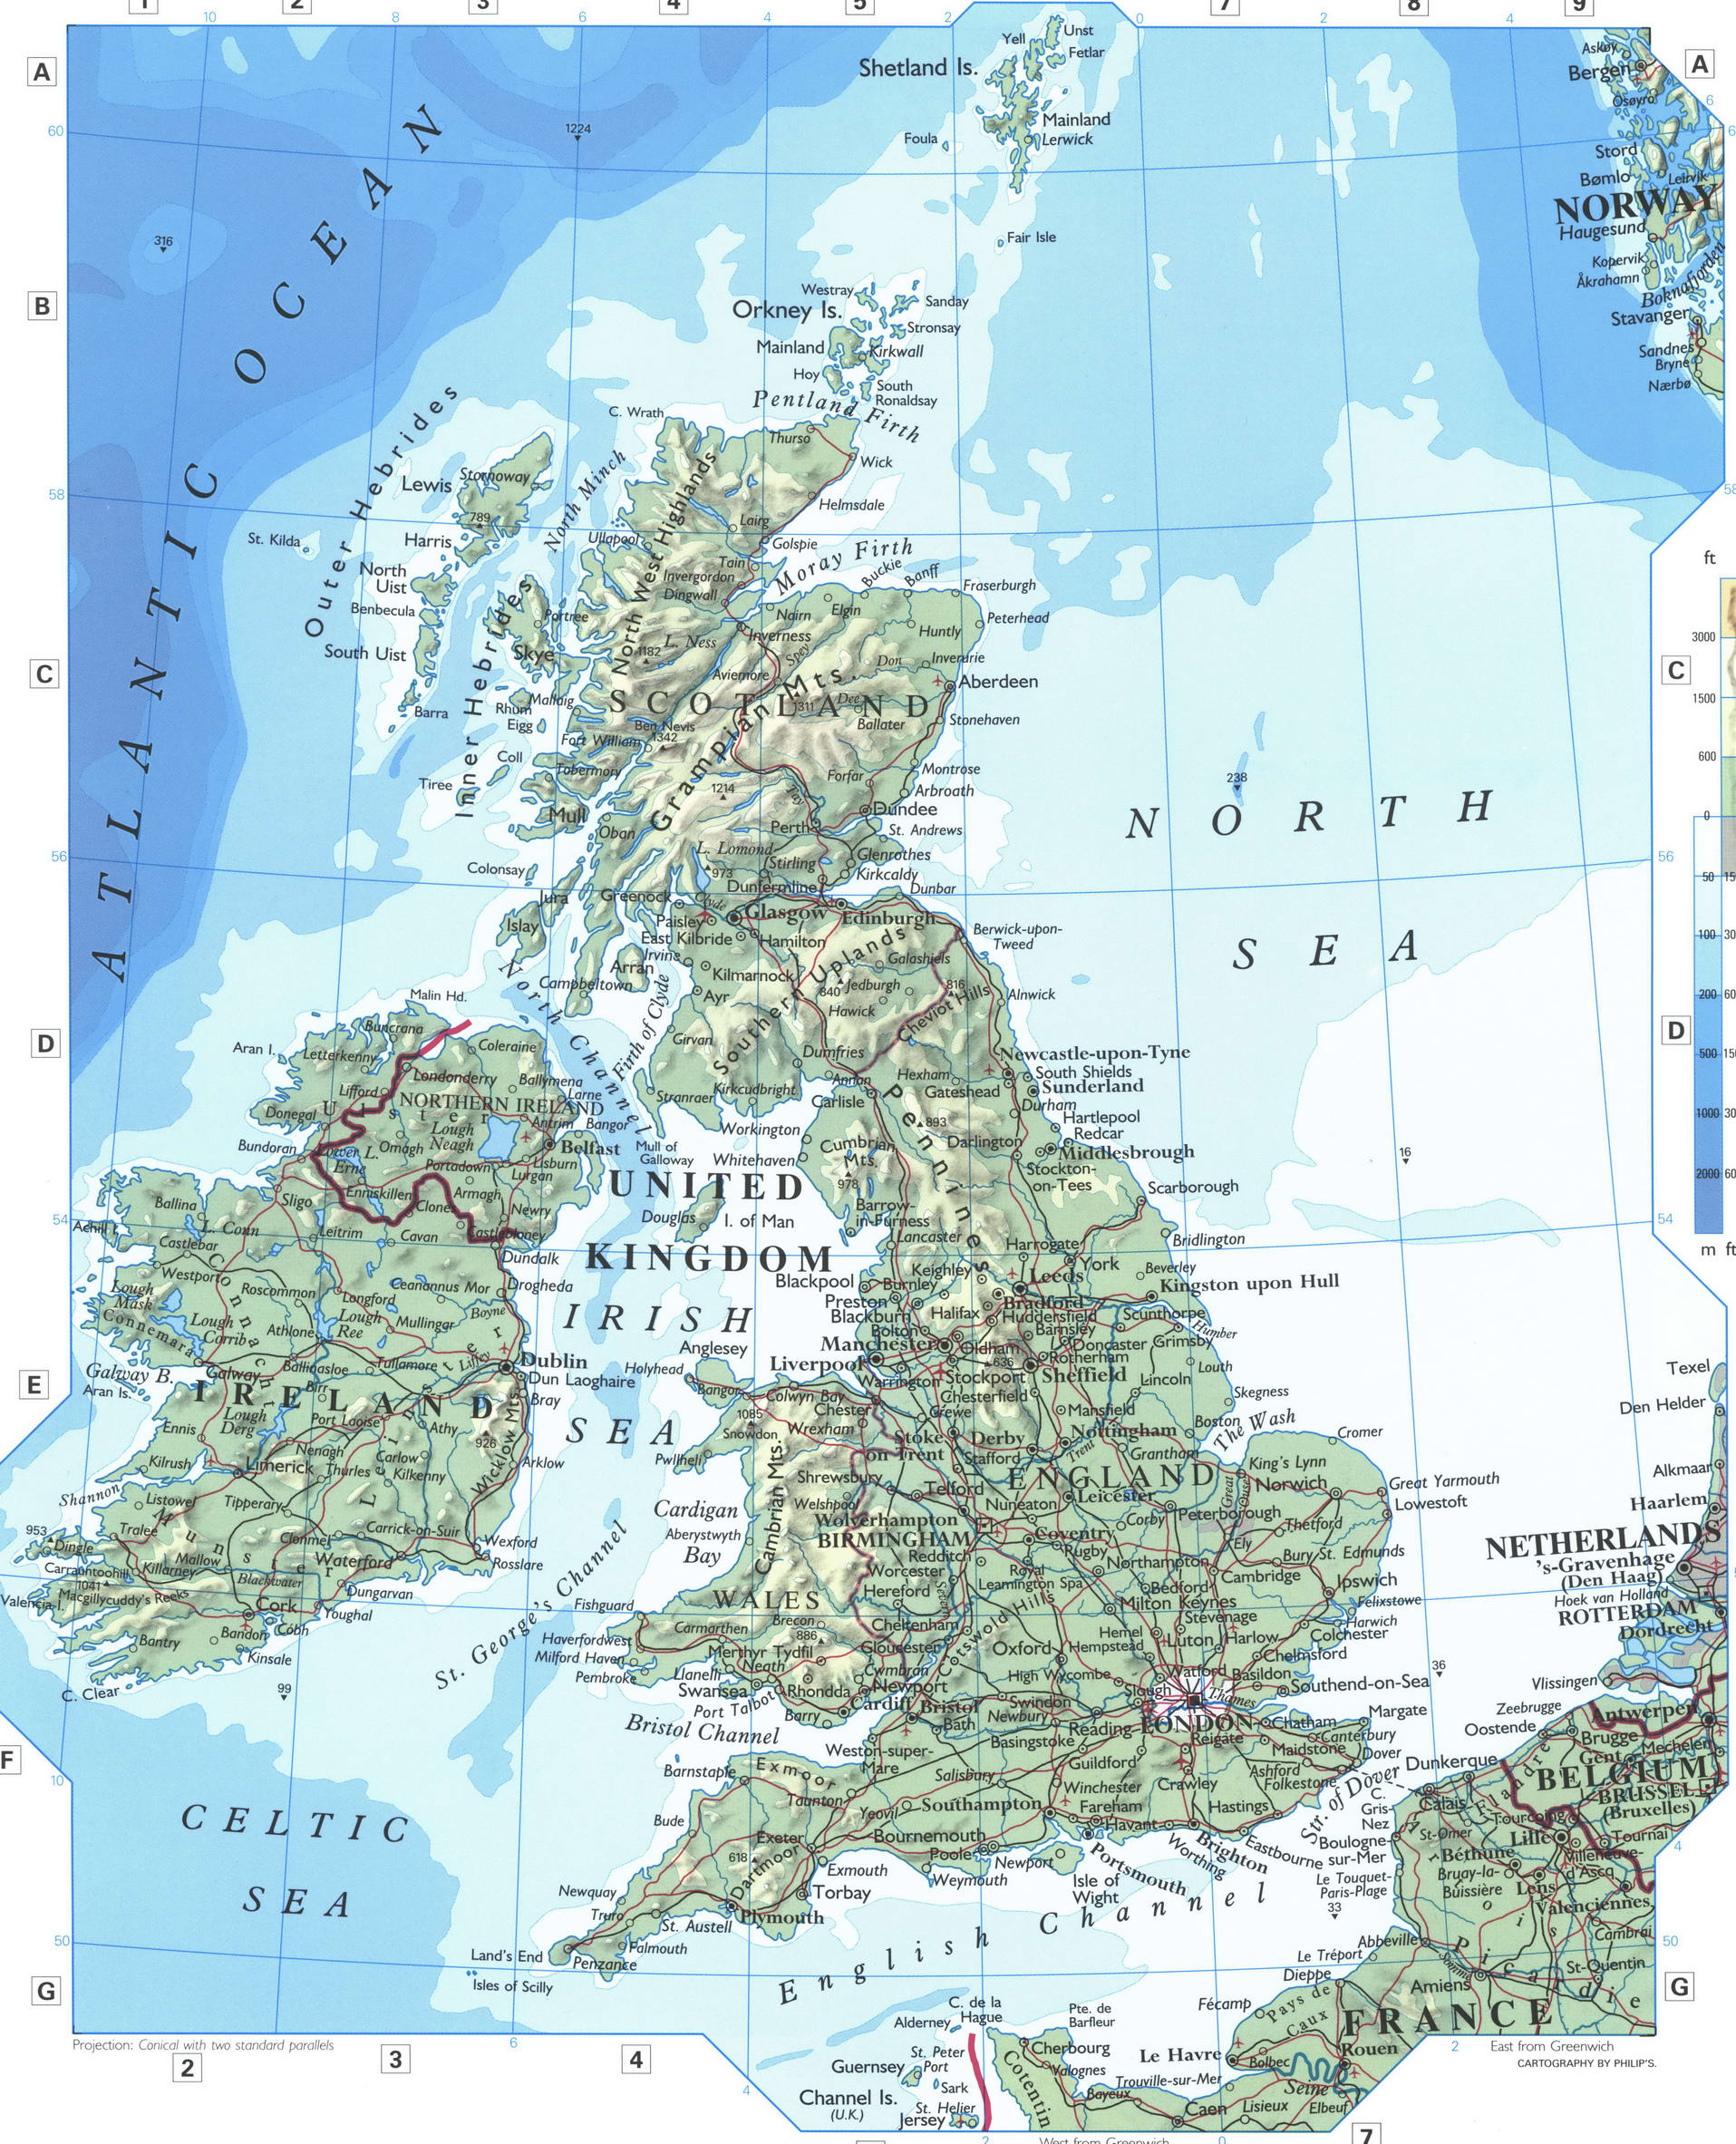 Britain Isles map